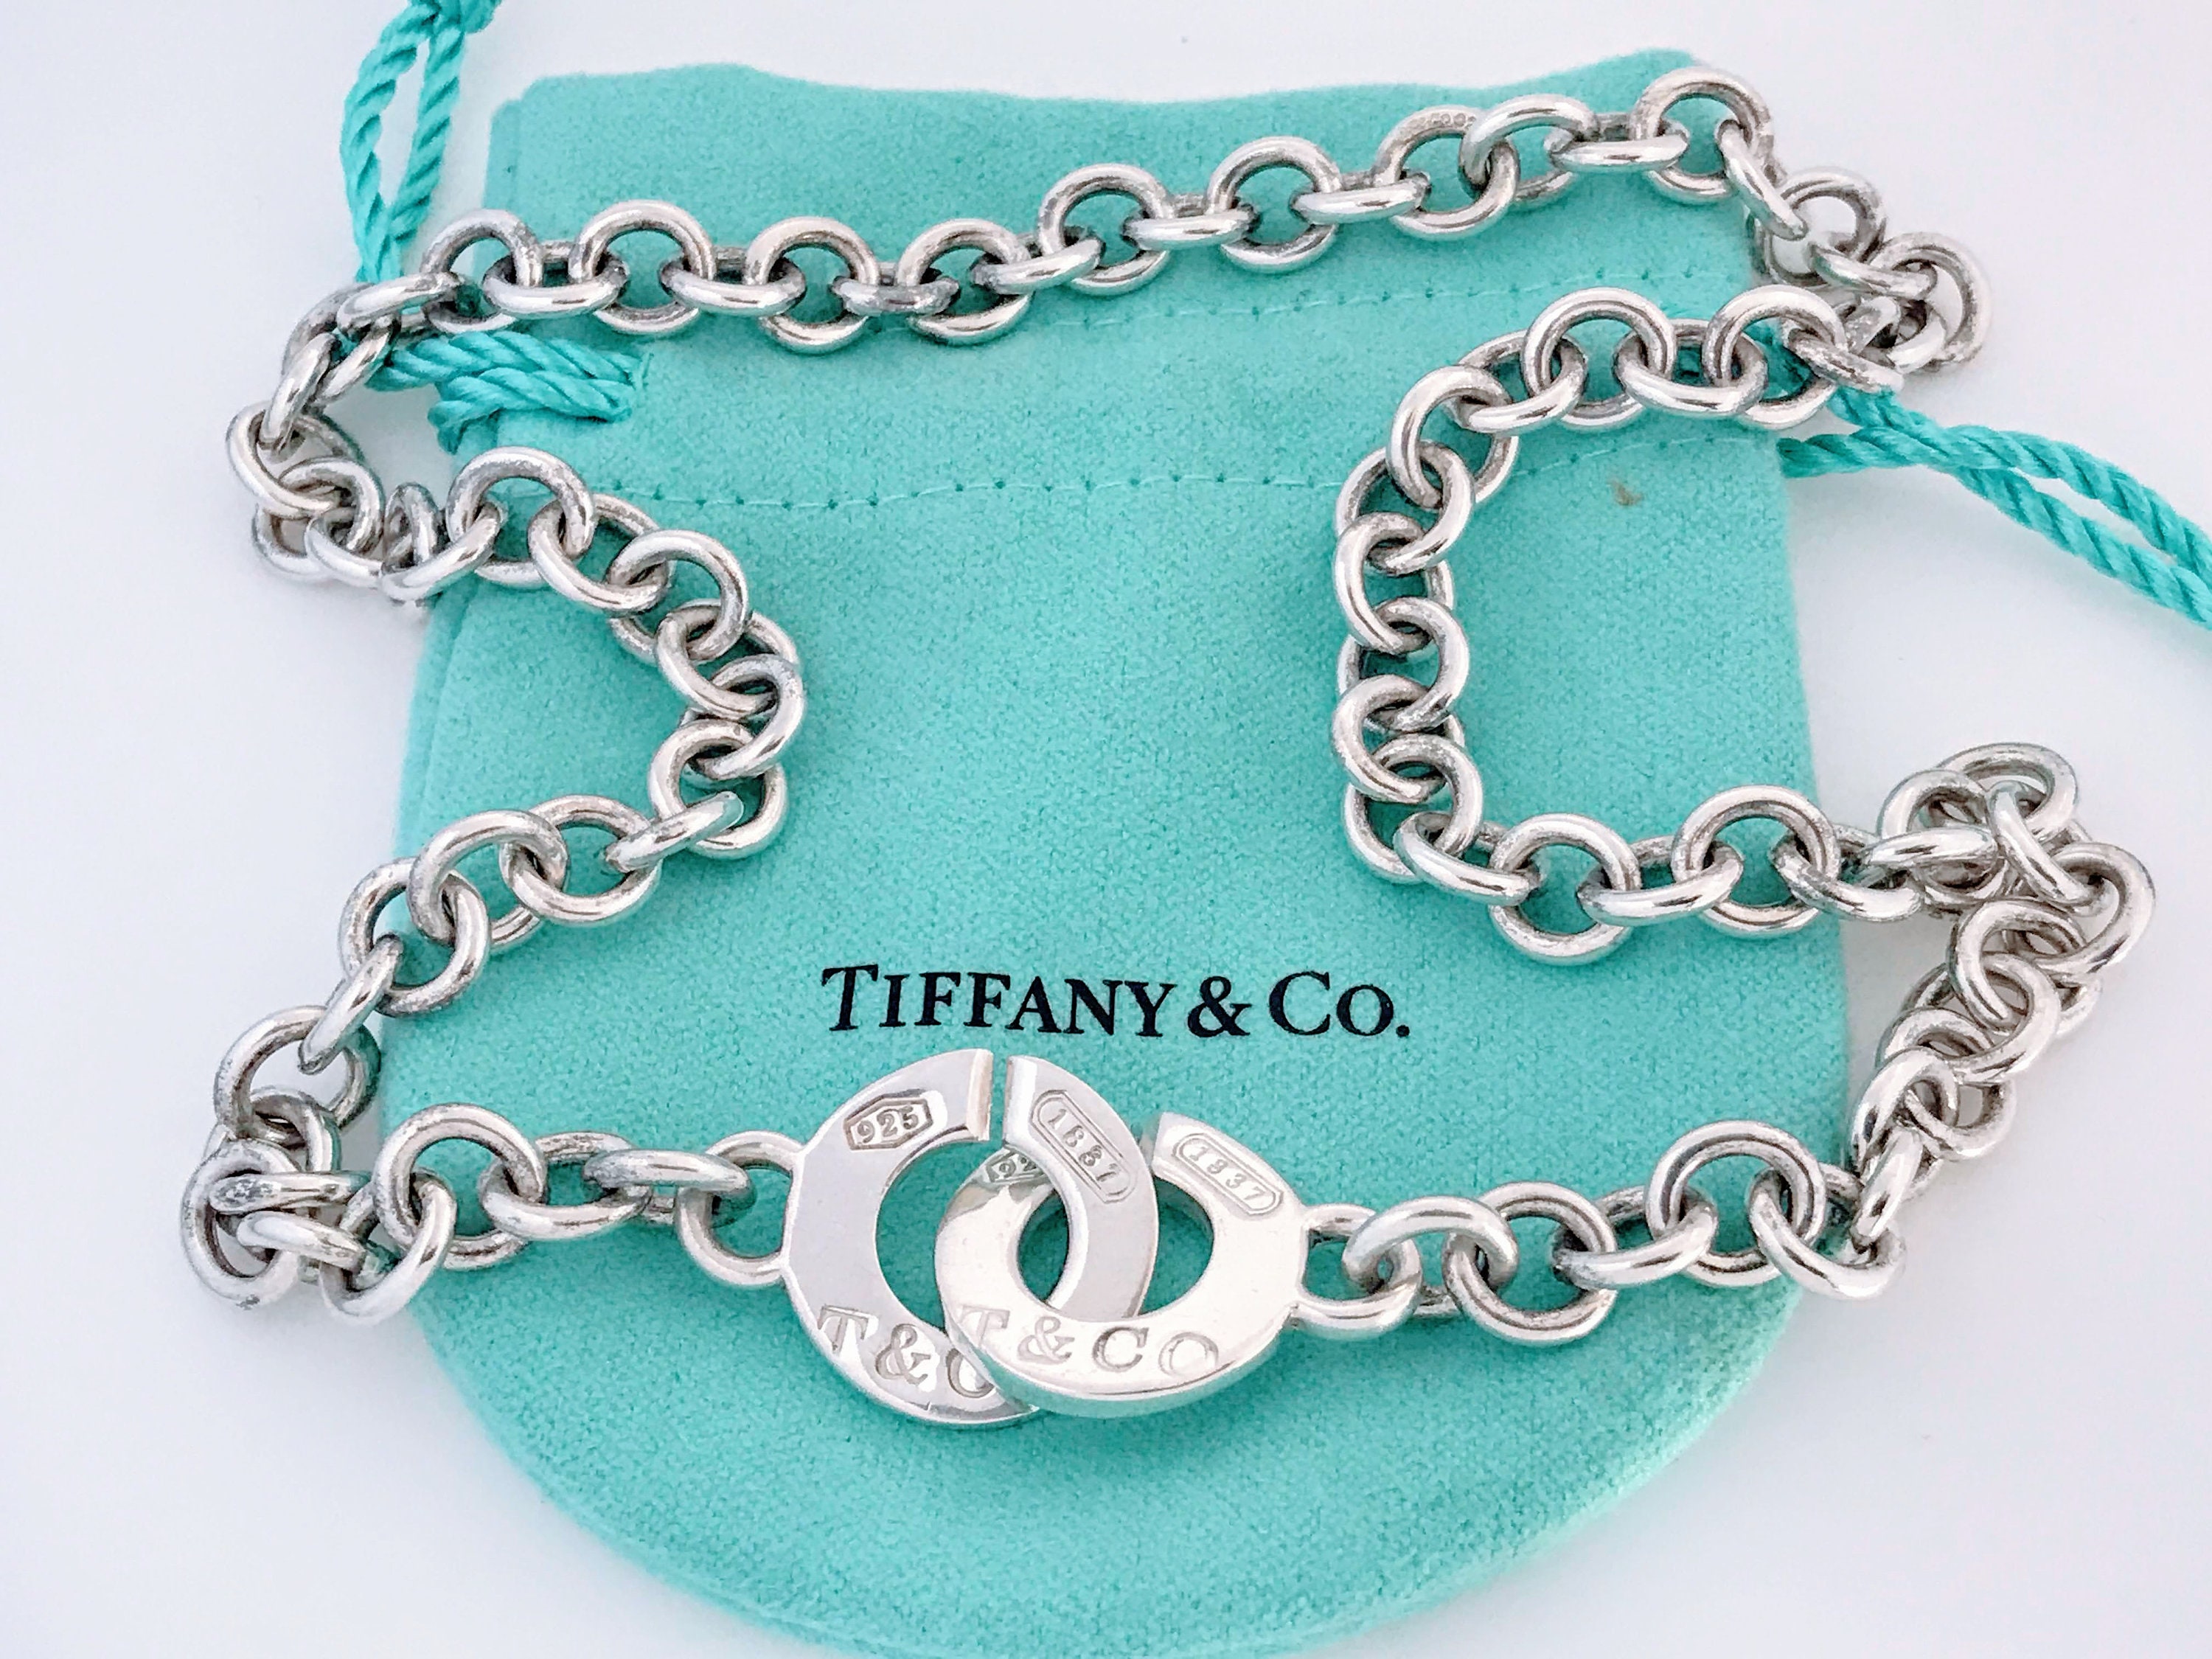 Tiffany & Co., Jewelry, Tiffany Co Packaging Set Left